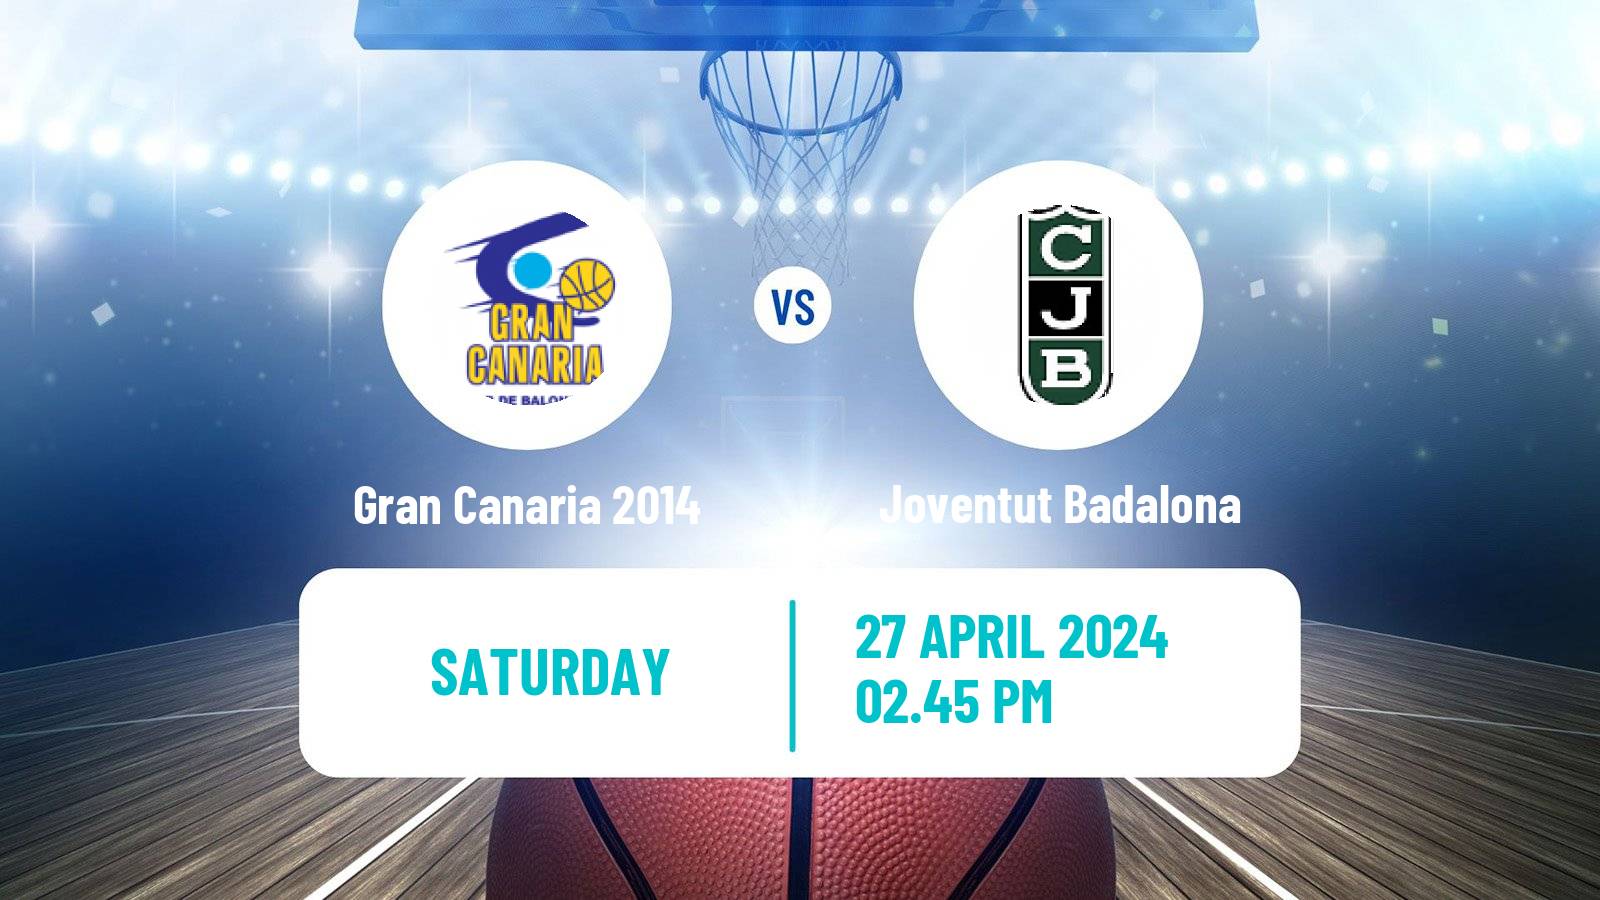 Basketball Spanish ACB League Gran Canaria 2014 - Joventut Badalona